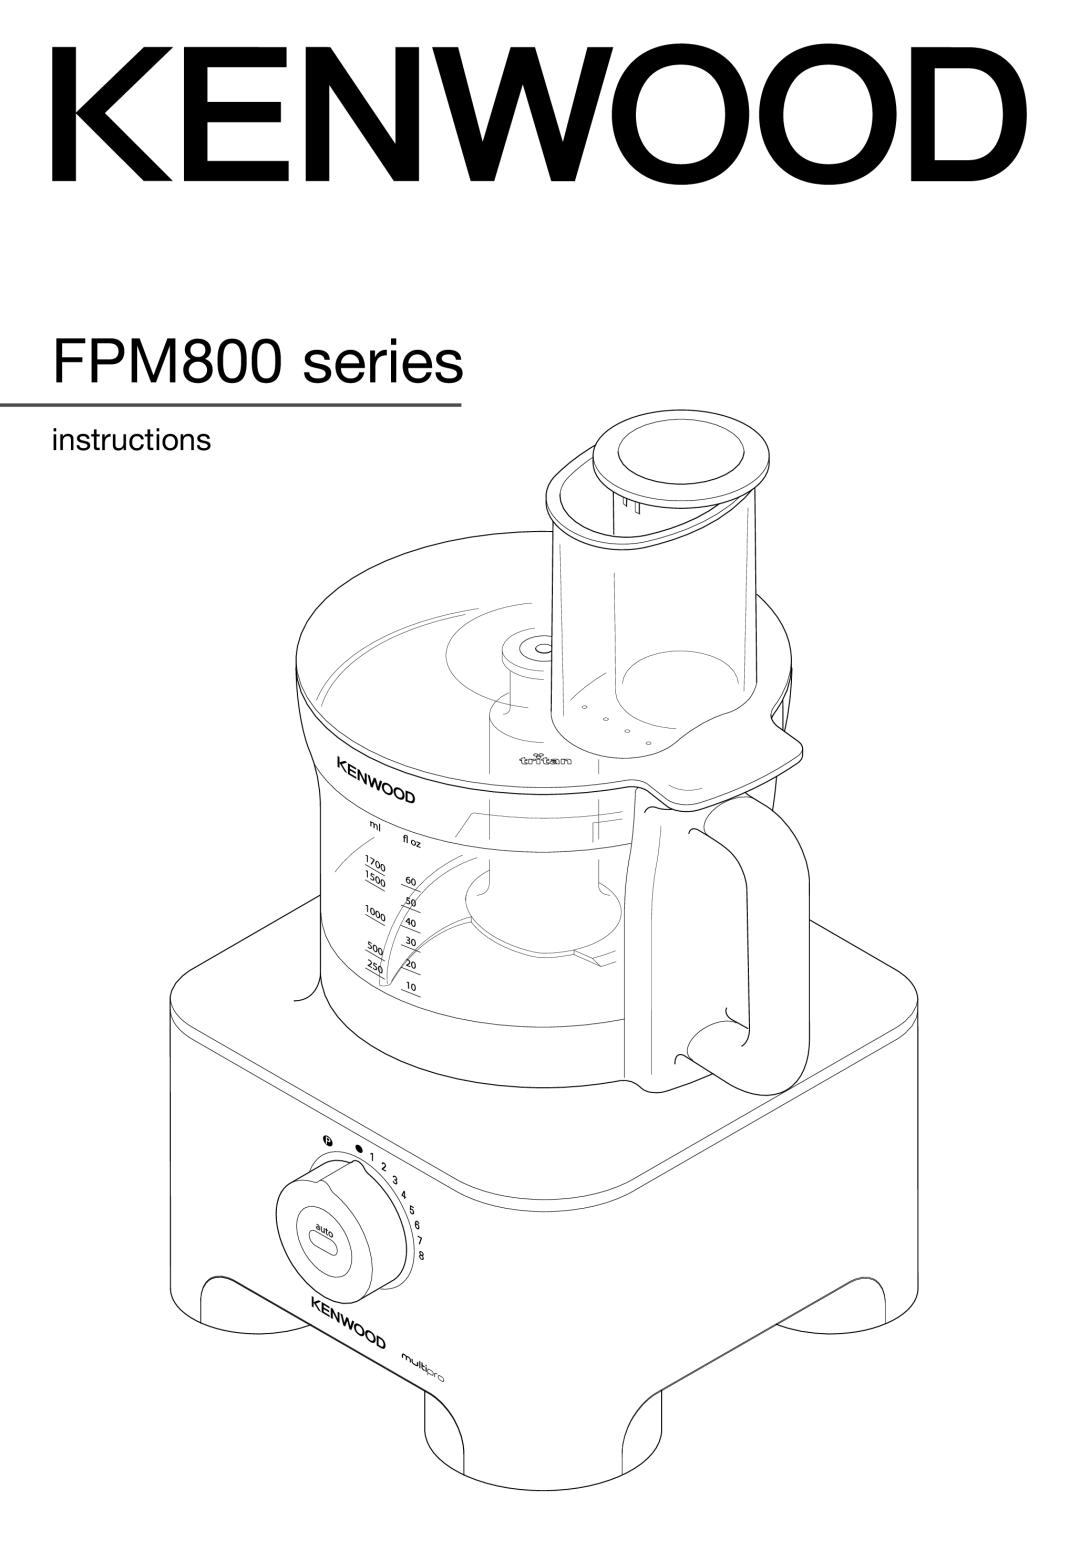 Kenwood manual instructions, FPM800 series 